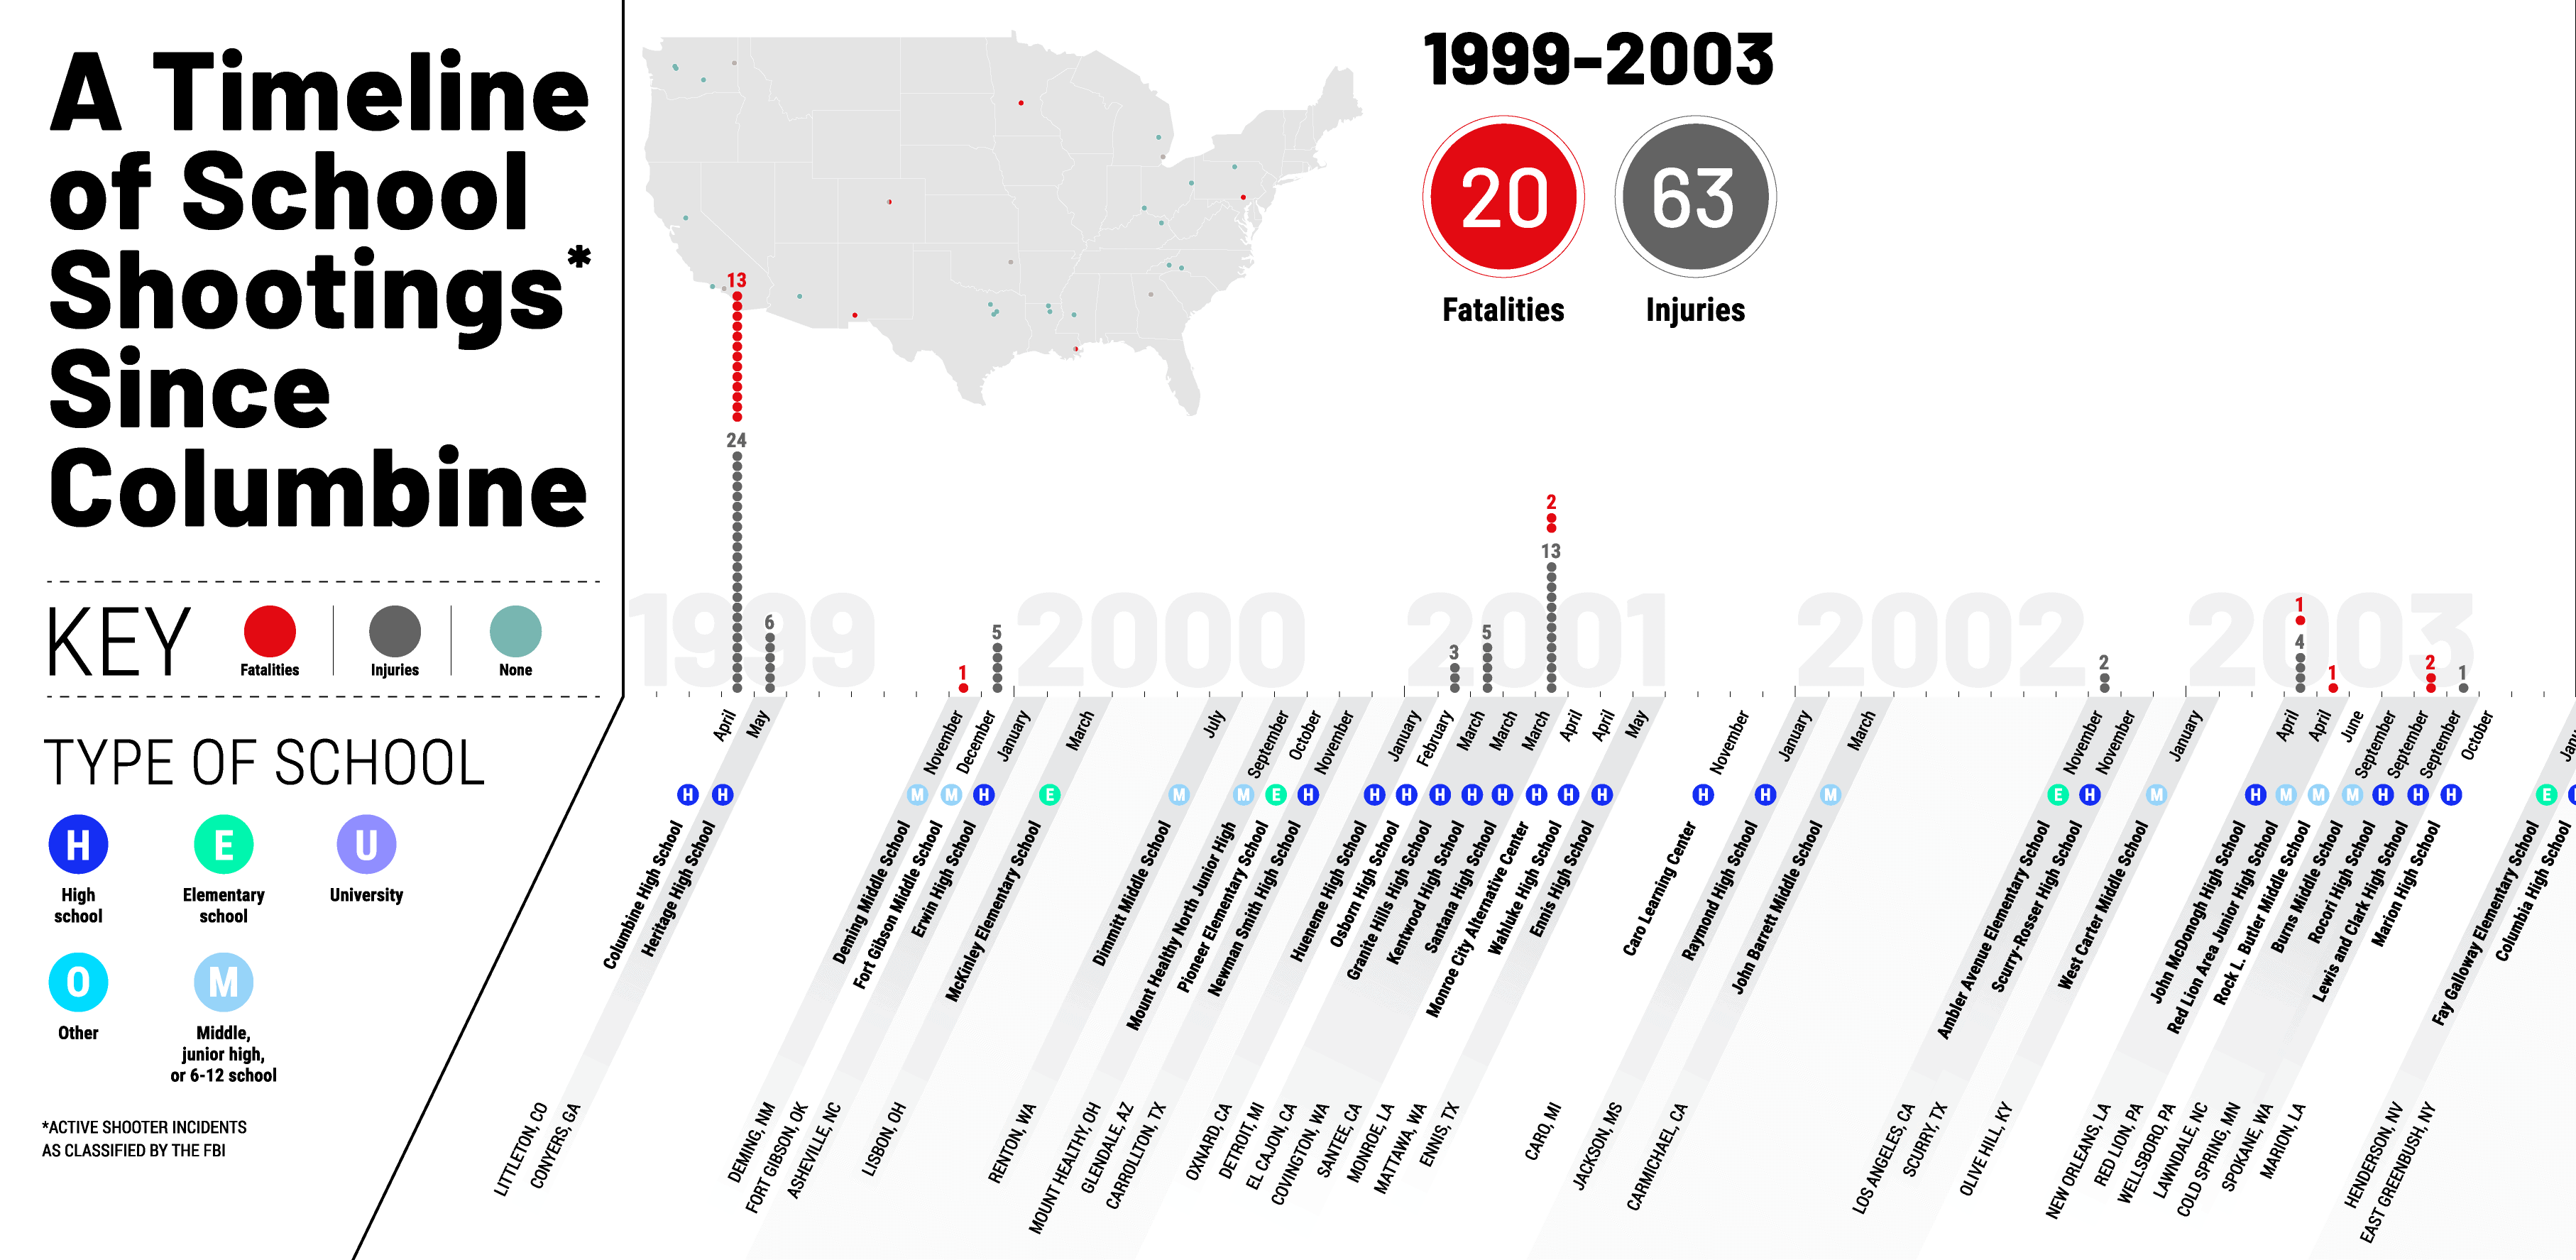 A Timeline of School Shootings Since Columbine